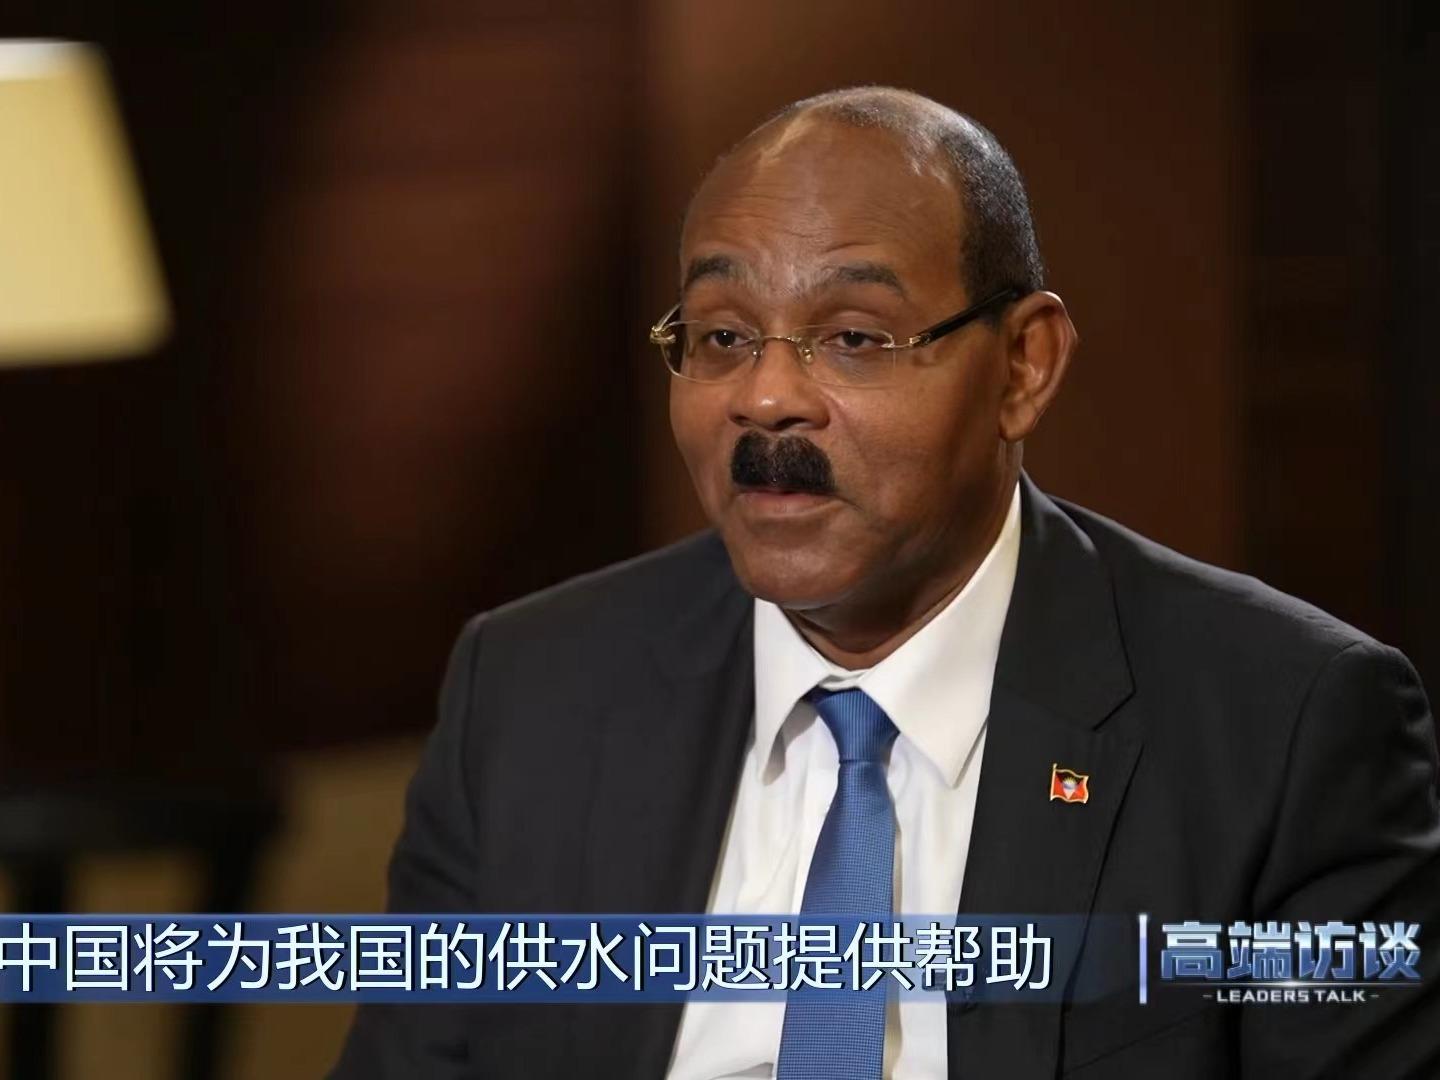 Sumbangan China terhadap Pembangunan dan Kemakmuran Dunia Mengagumkan: PM Antigua dan Barbuda